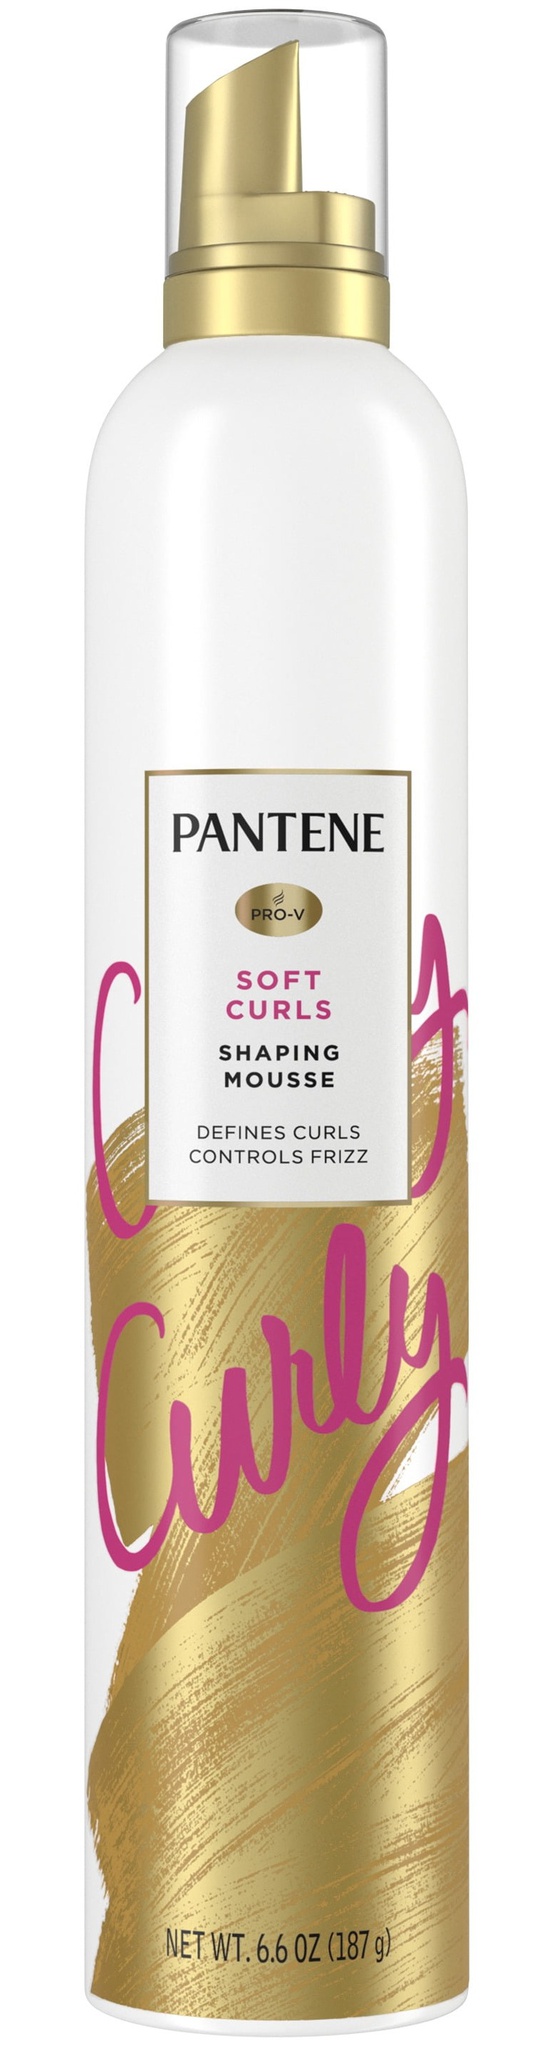 Pantene Pro-V Soft Curls Shaping Mousse